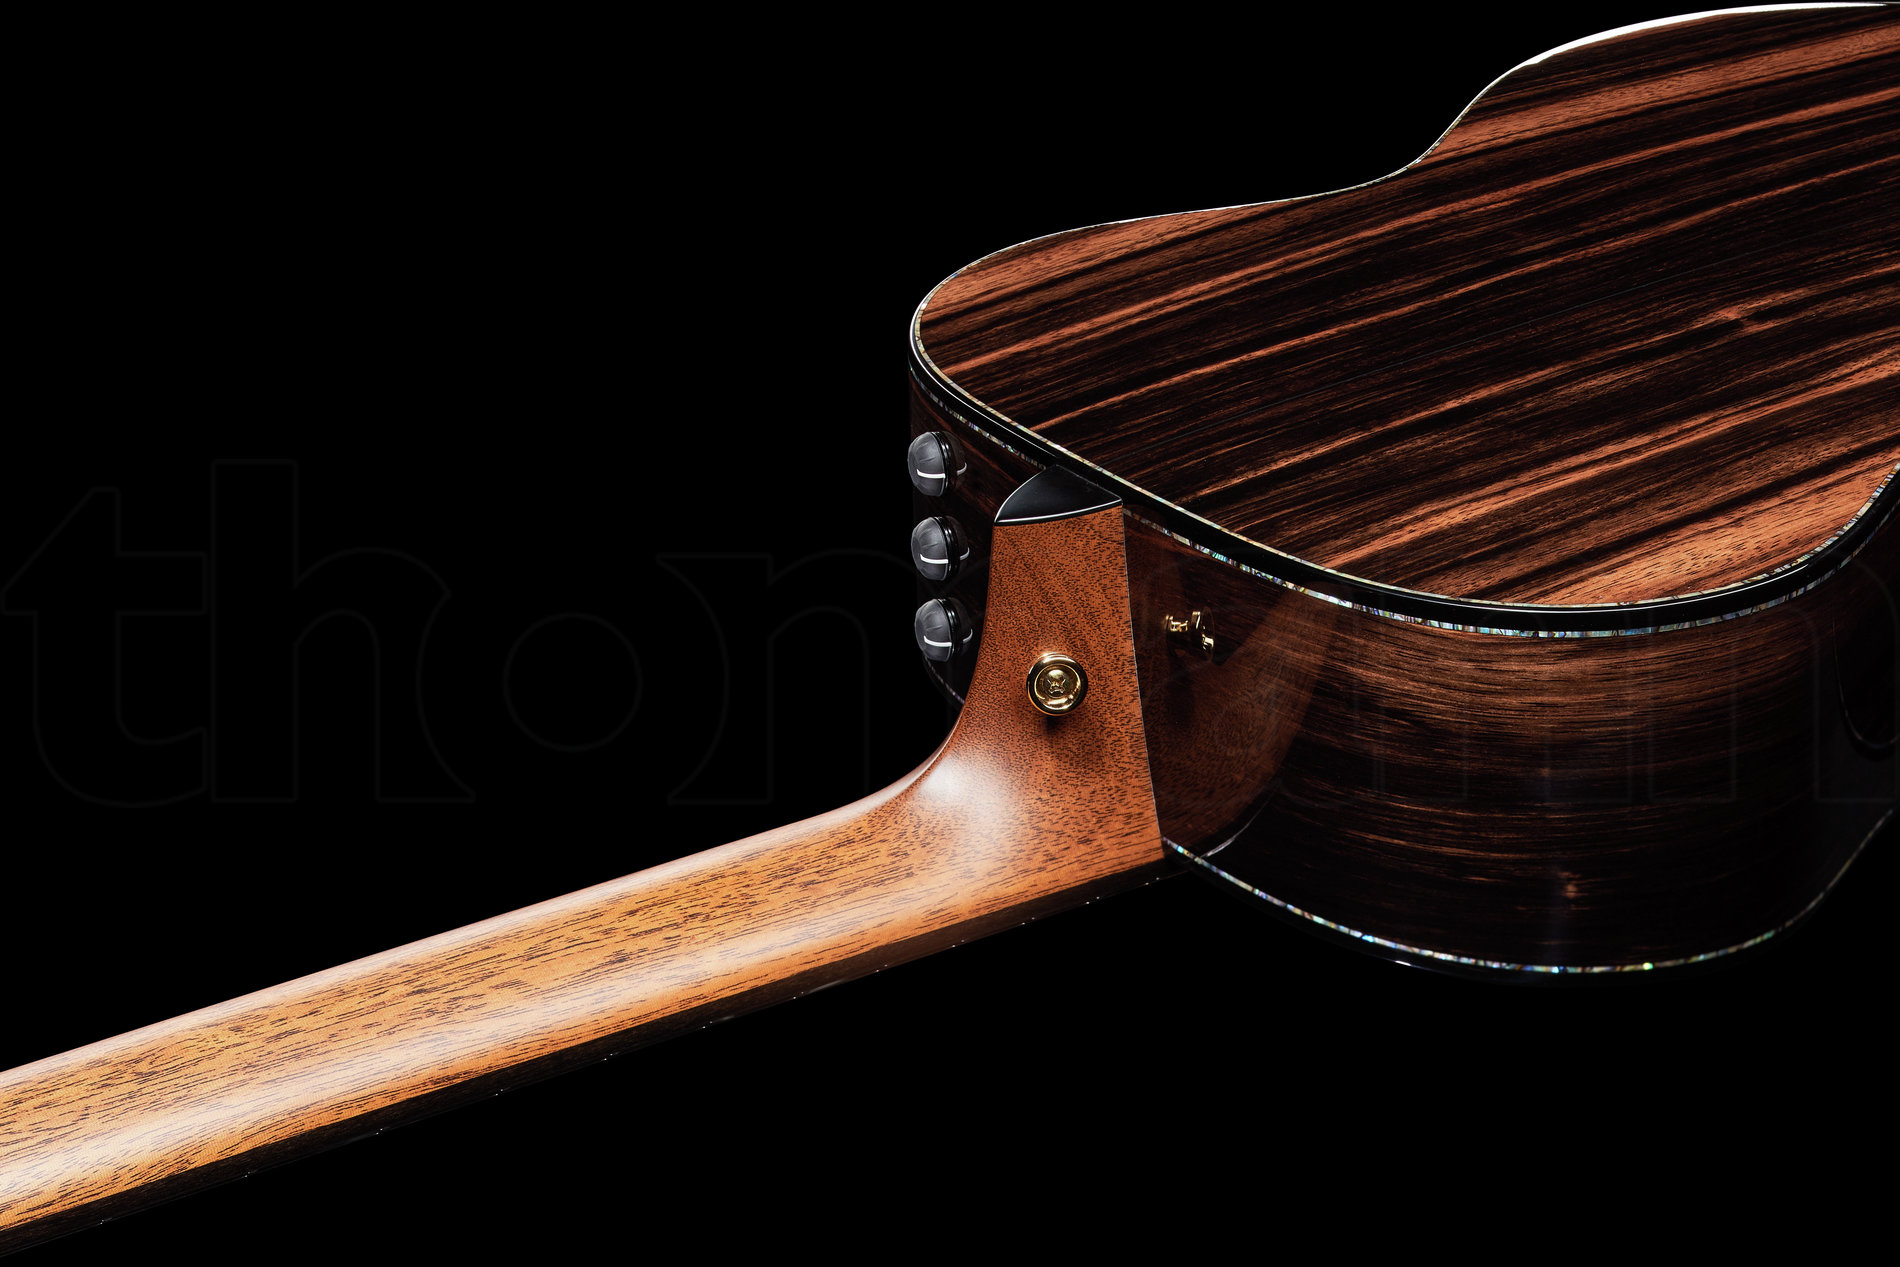 Rückseite einer Taylor Guitars PS12e Akustikgitarre aus massivem Macassar Ebony und Mother of Peal Binding.